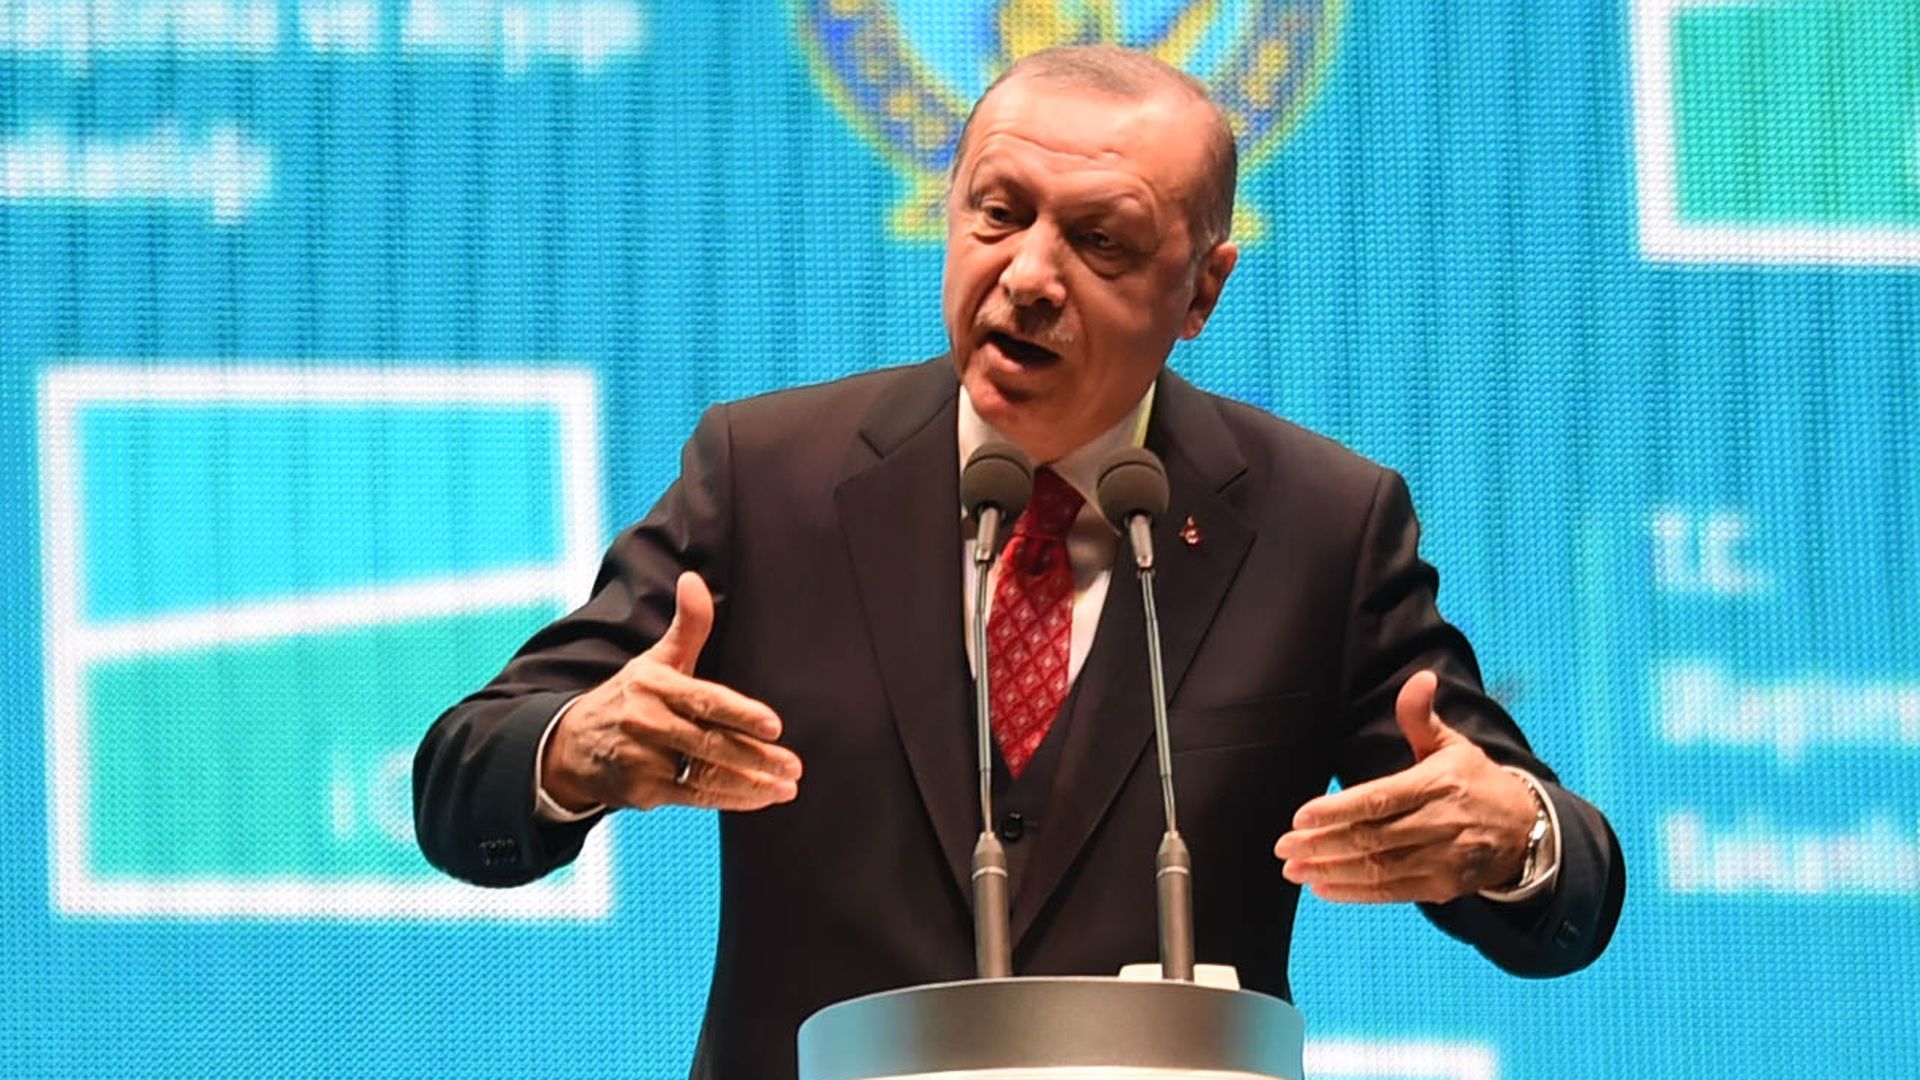 President Erdogan speaking at a podium.